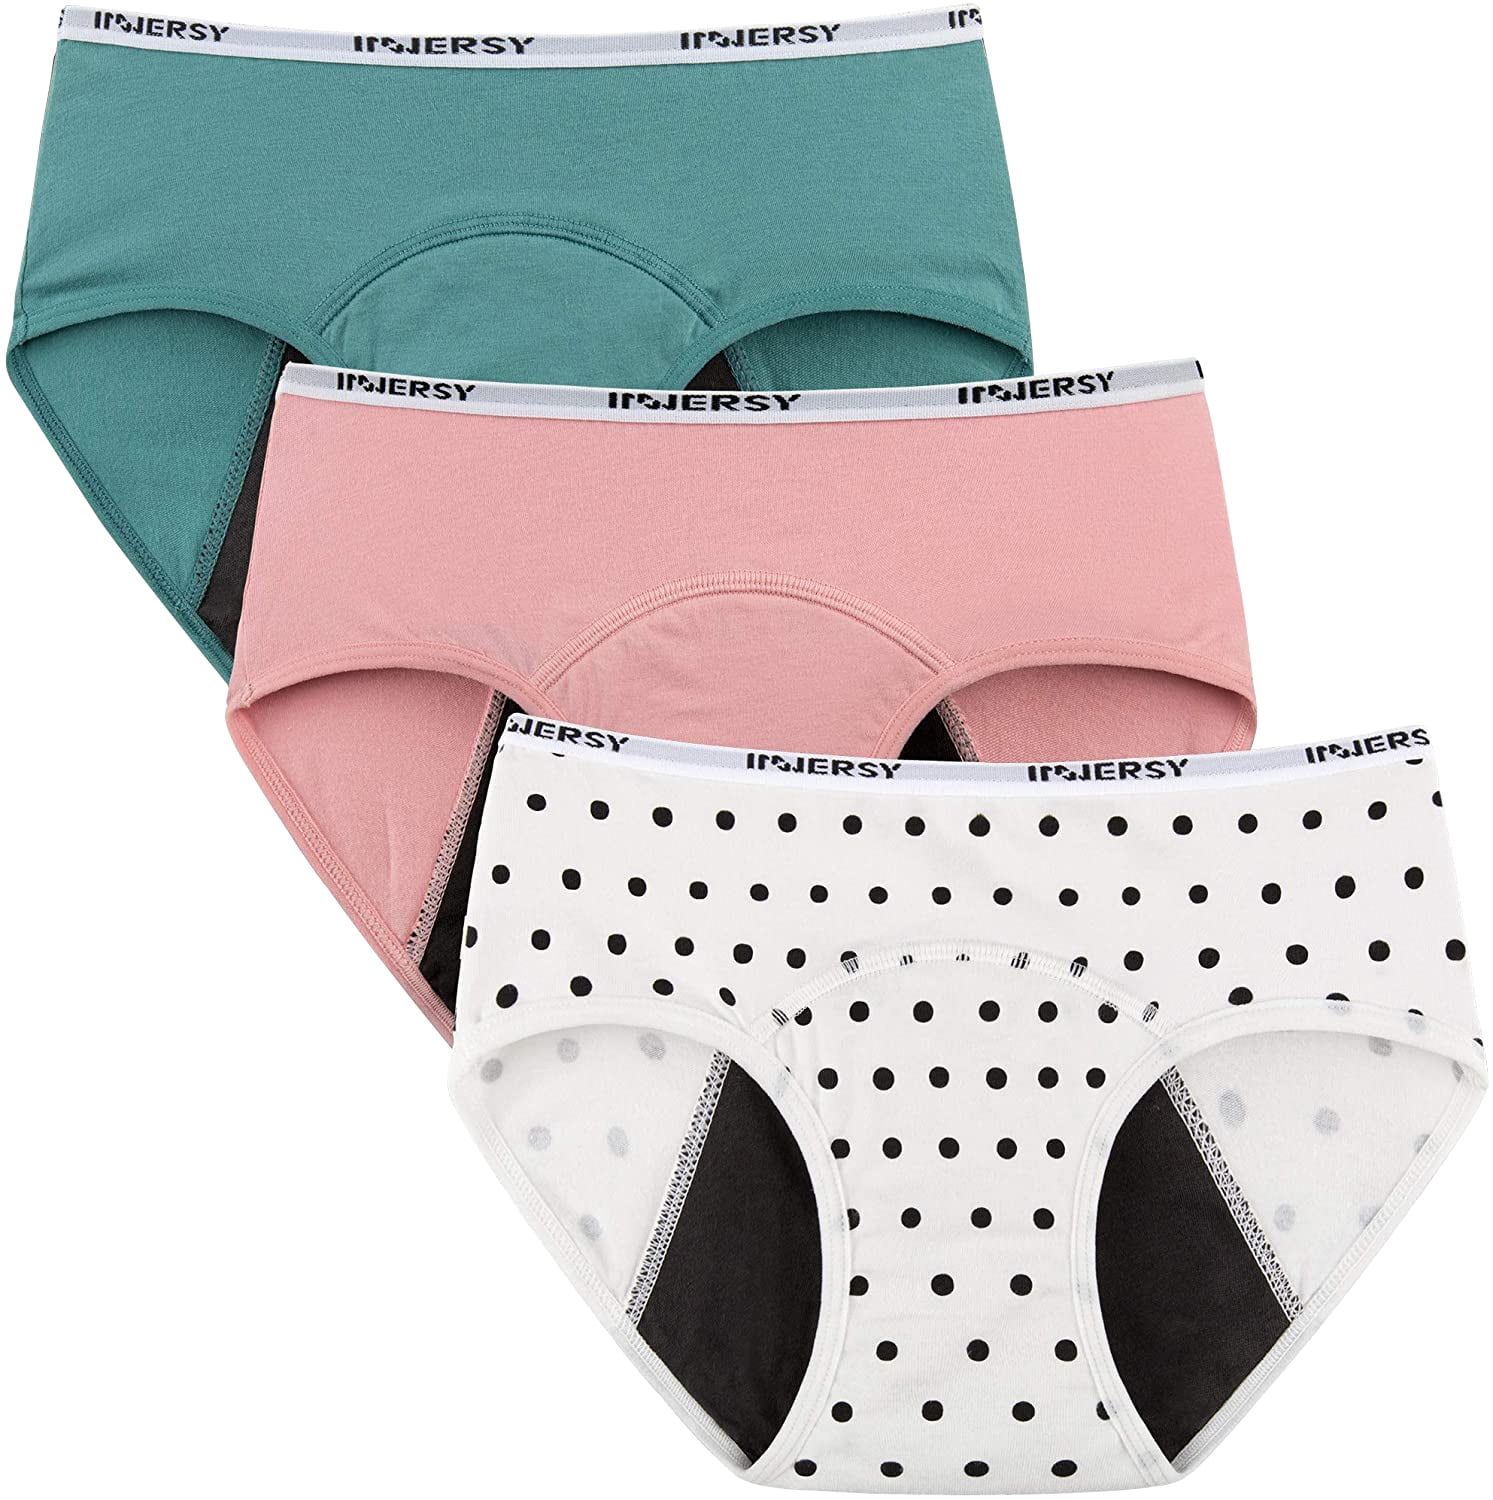 INNERSY Period Underwear for Teens Cotton Leekproof Menstrual